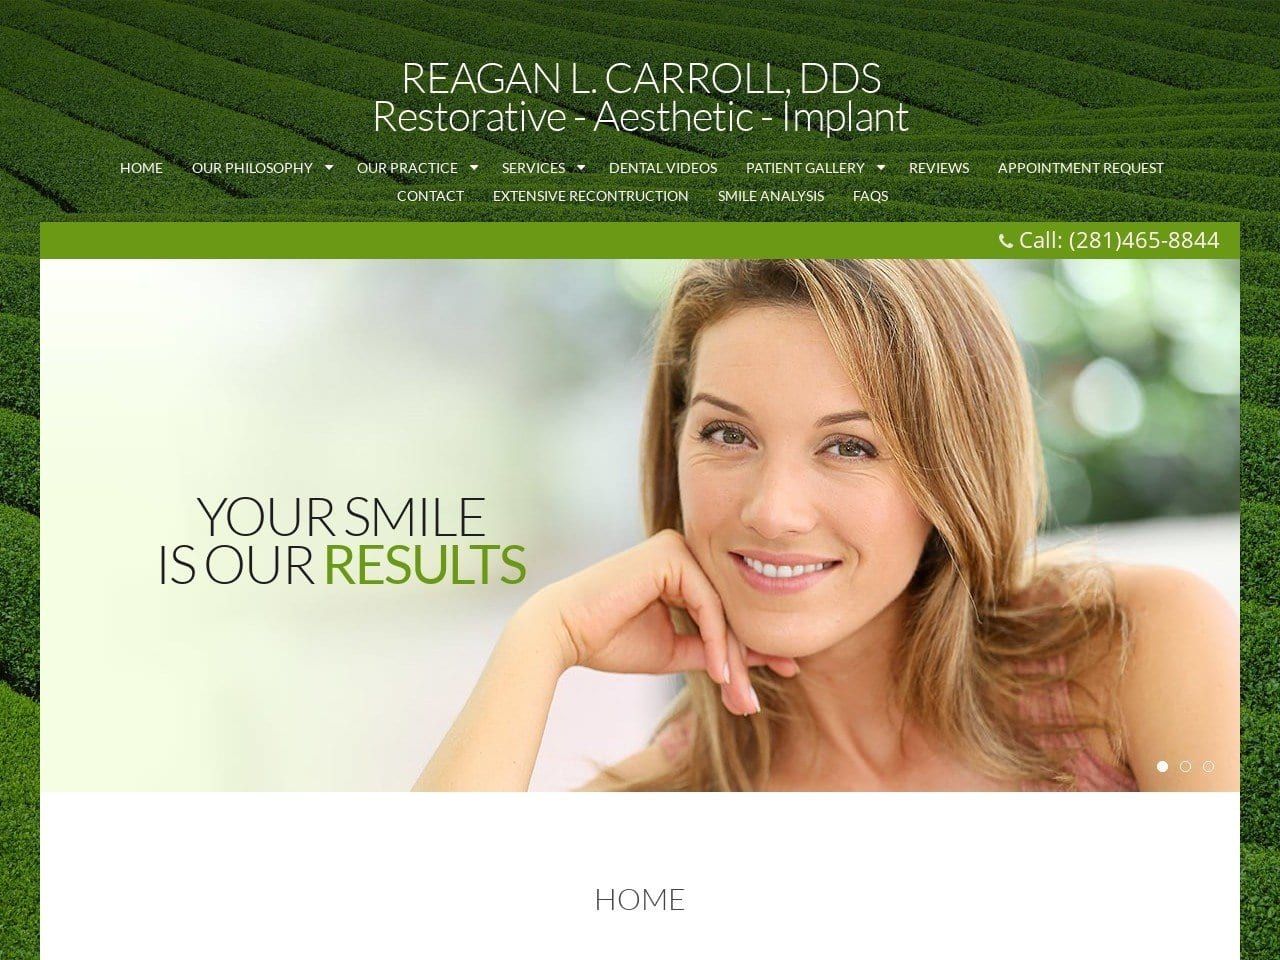 Reagan L. Carroll DDS Website Screenshot from reagancarrolldds.com